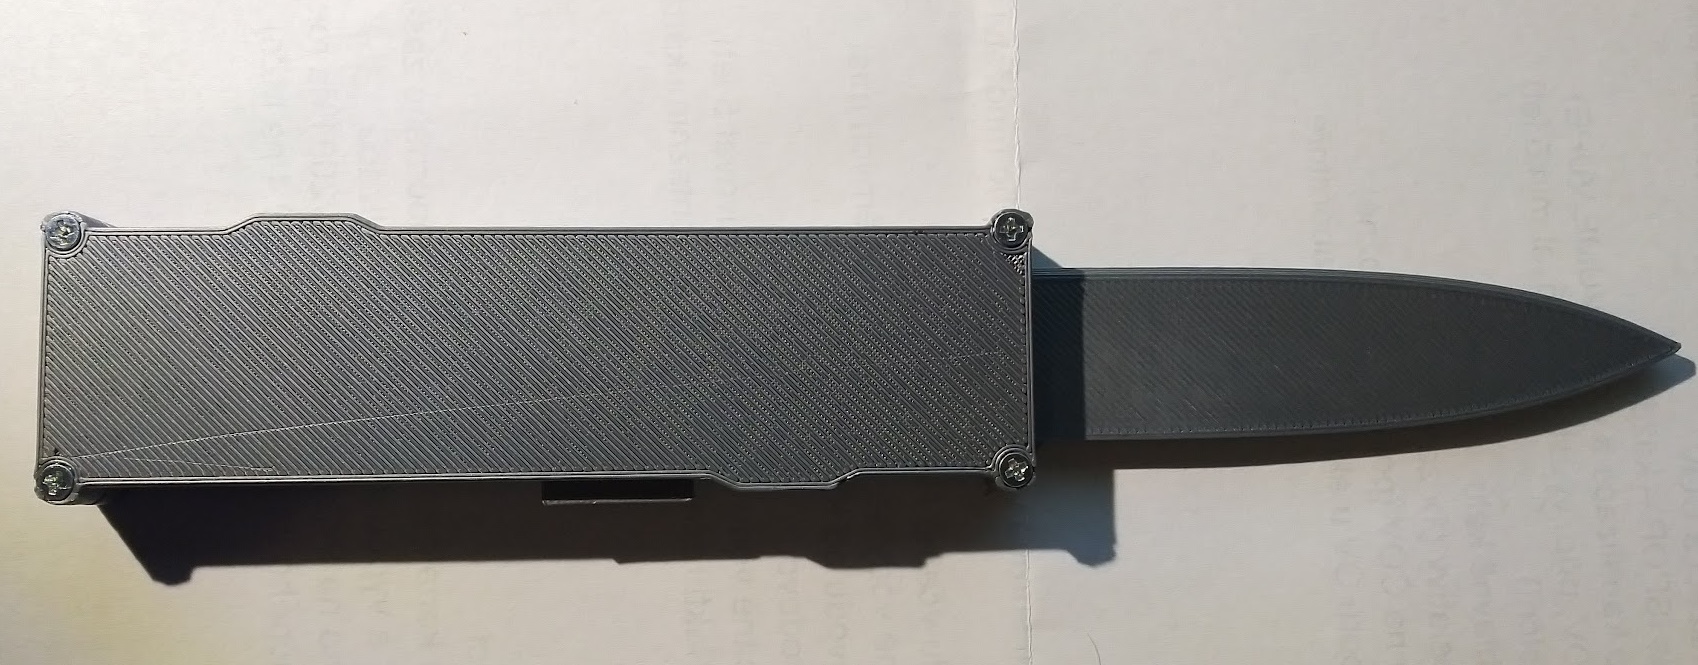 Double Action OTF Knife prototype model